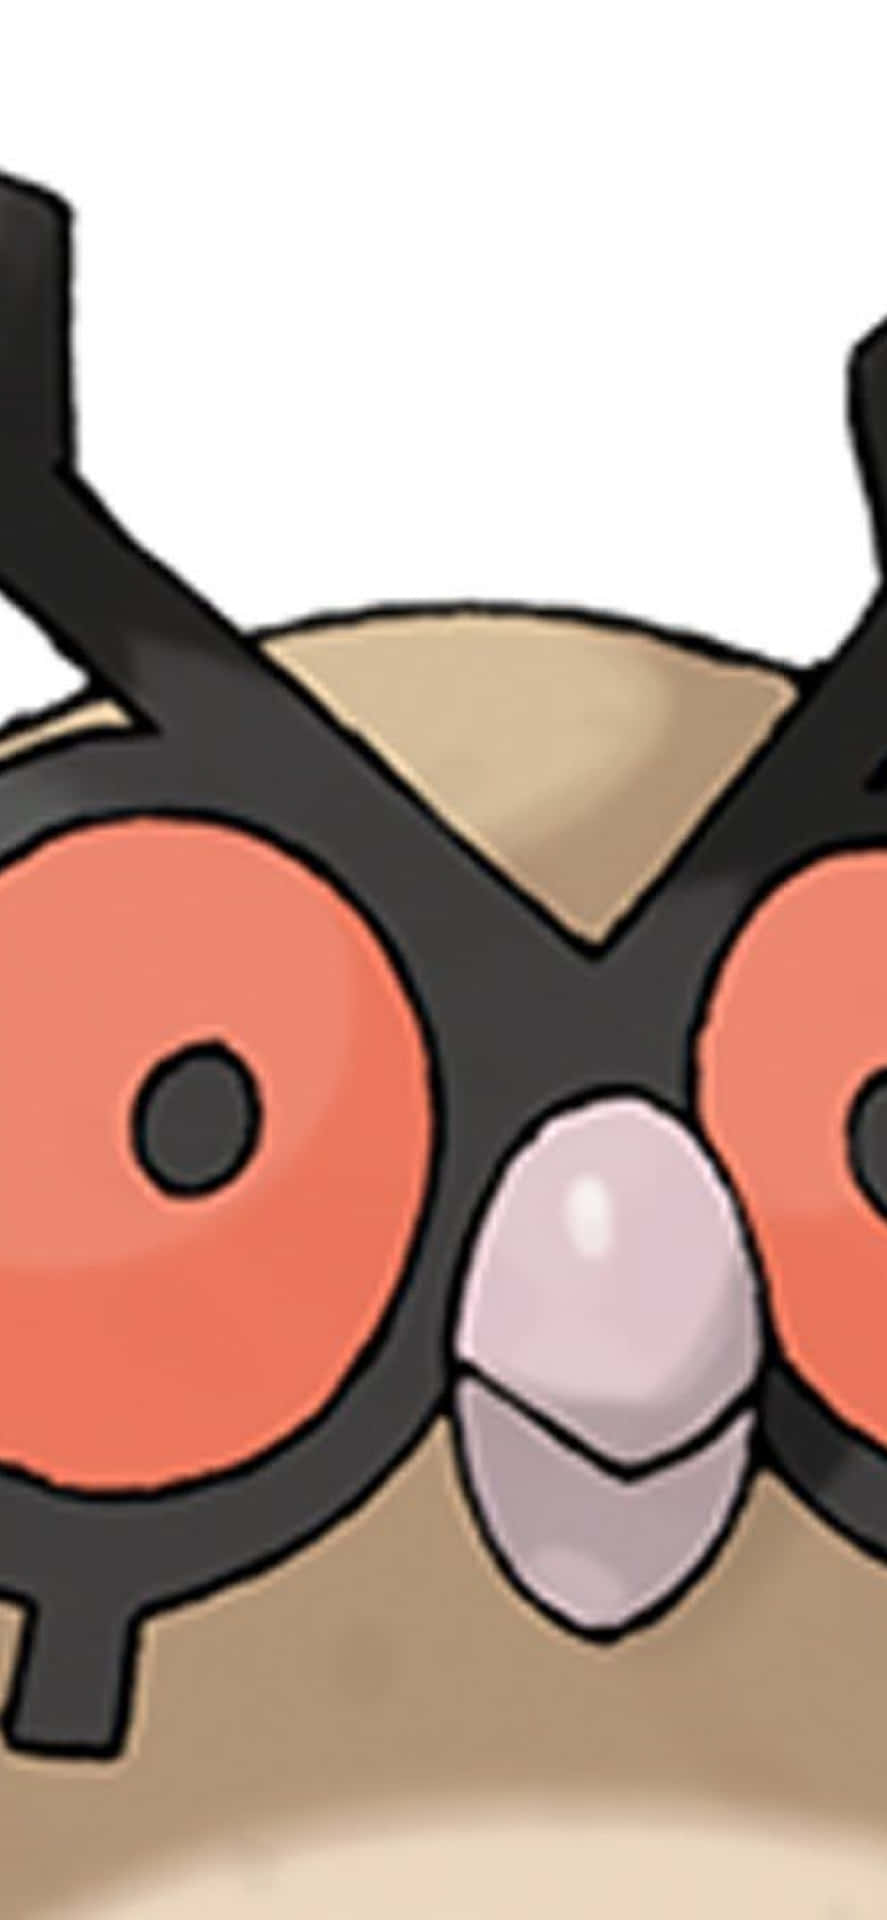 Pokemon Hoothoot Face Up-Close Wallpaper